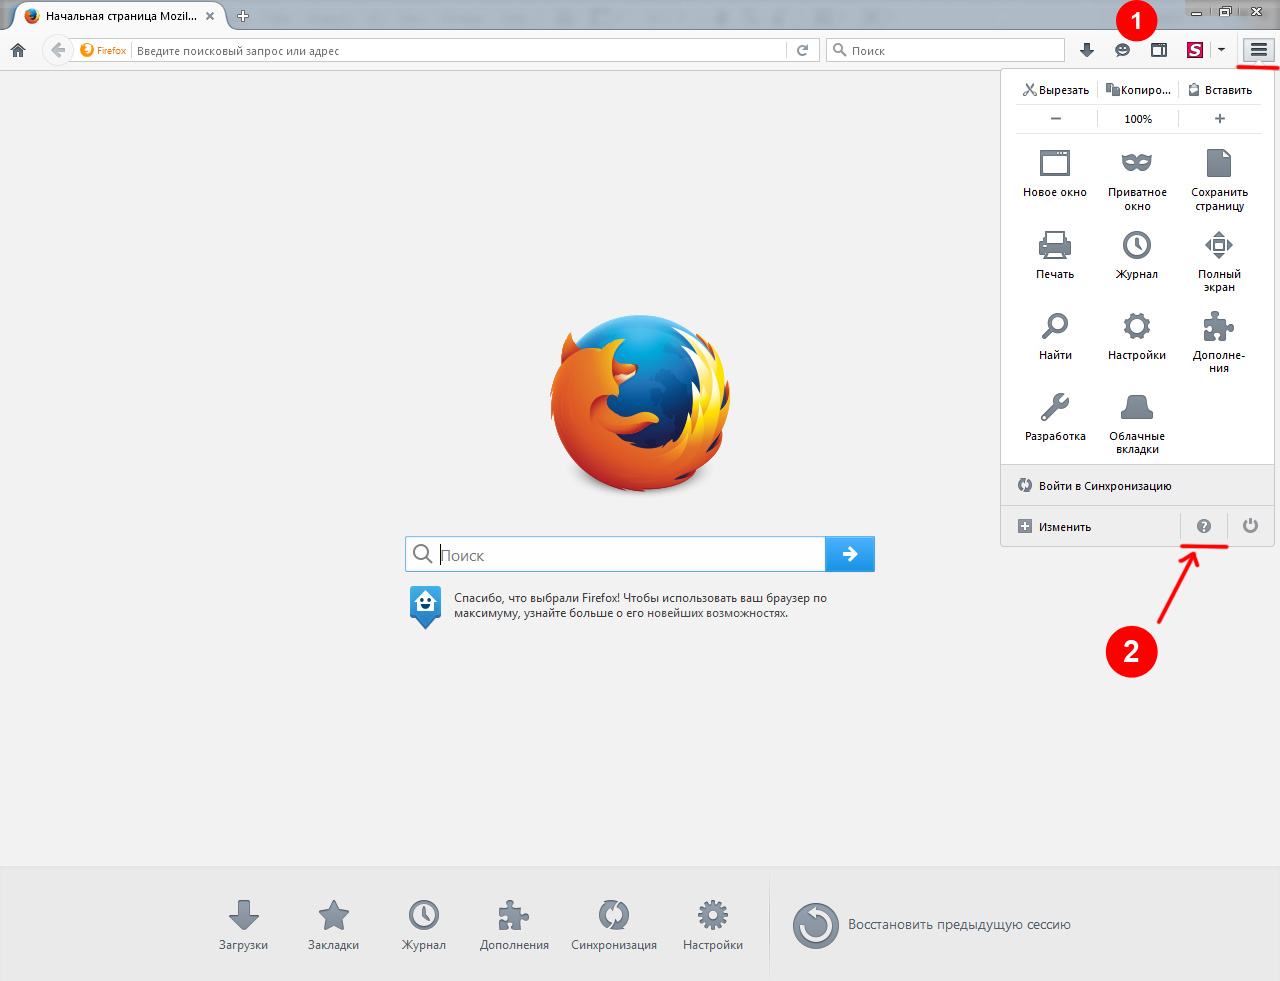 Omg Its Firefox Nude